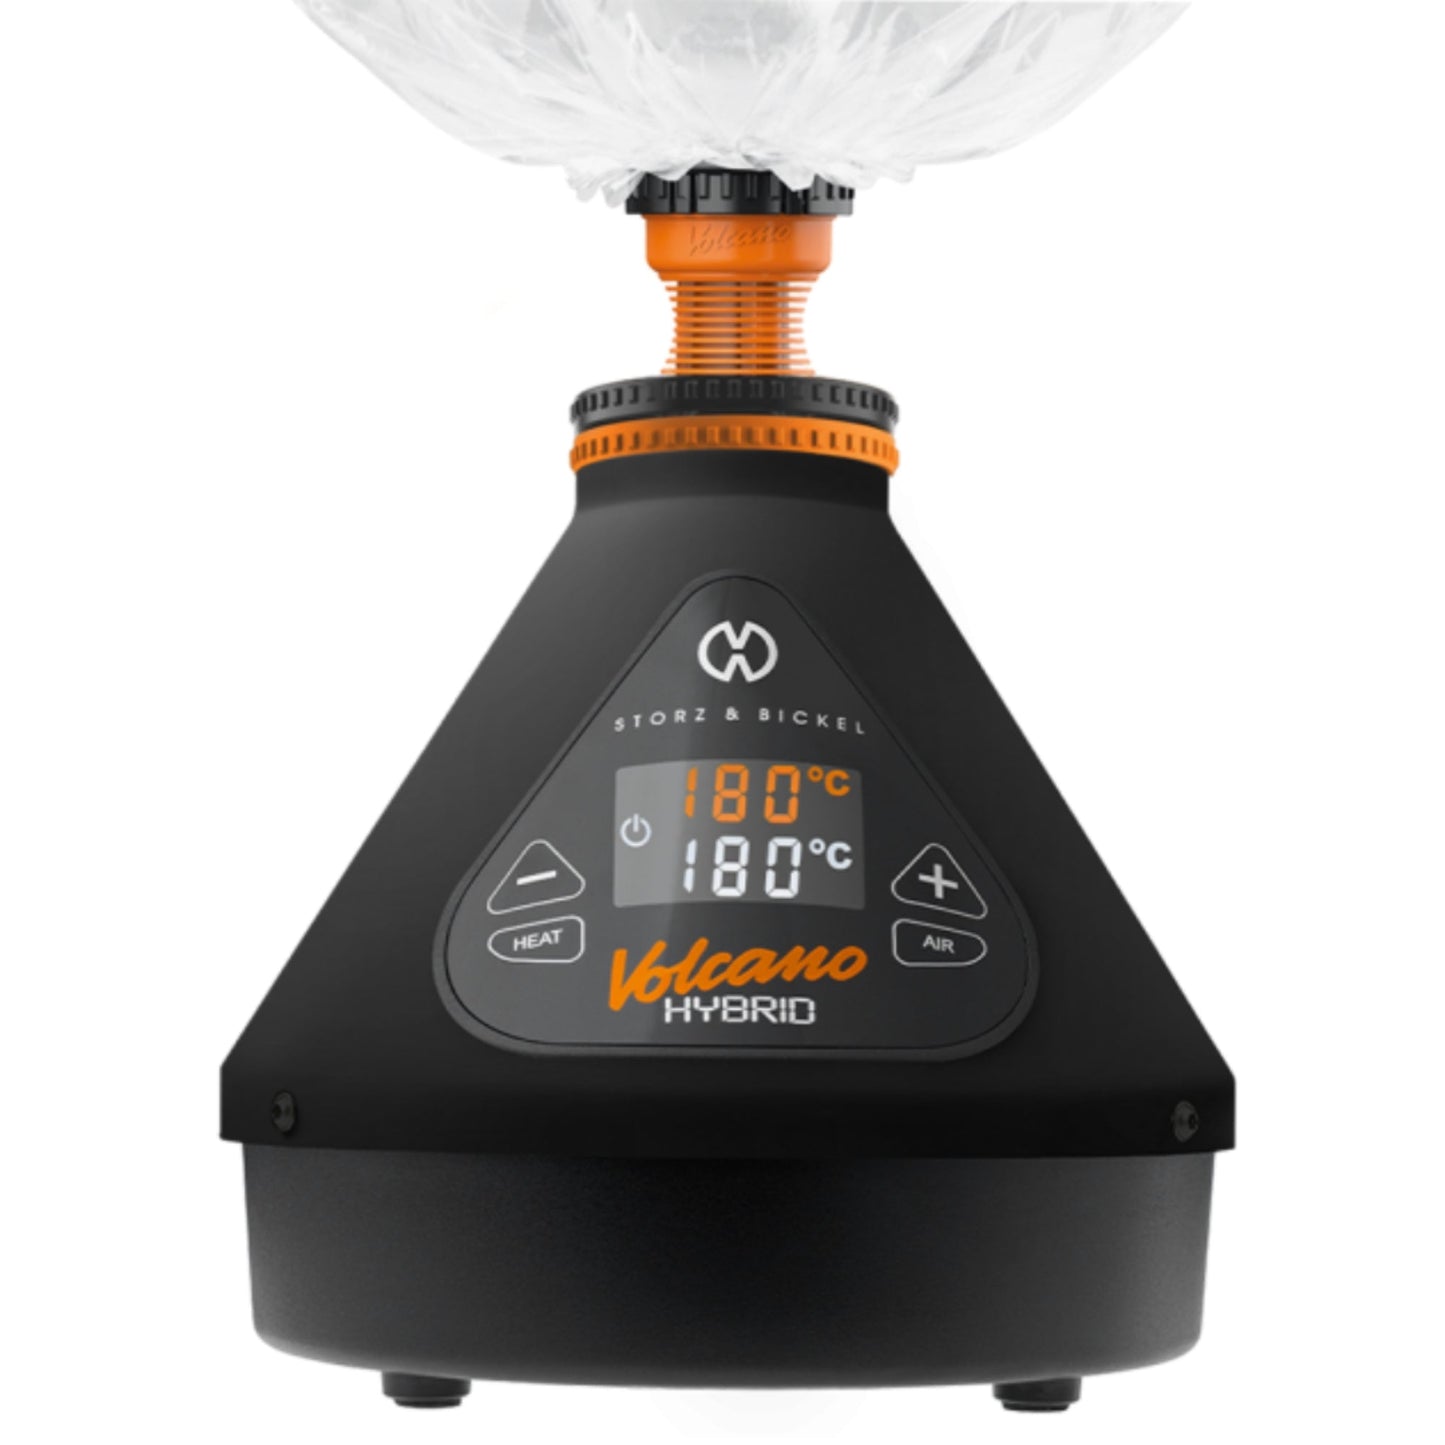 Storz & Bickel Onyx Edition Volcano Hybrid Vaporizer 🌿 by Storz & Bickel | Mission Dispensary